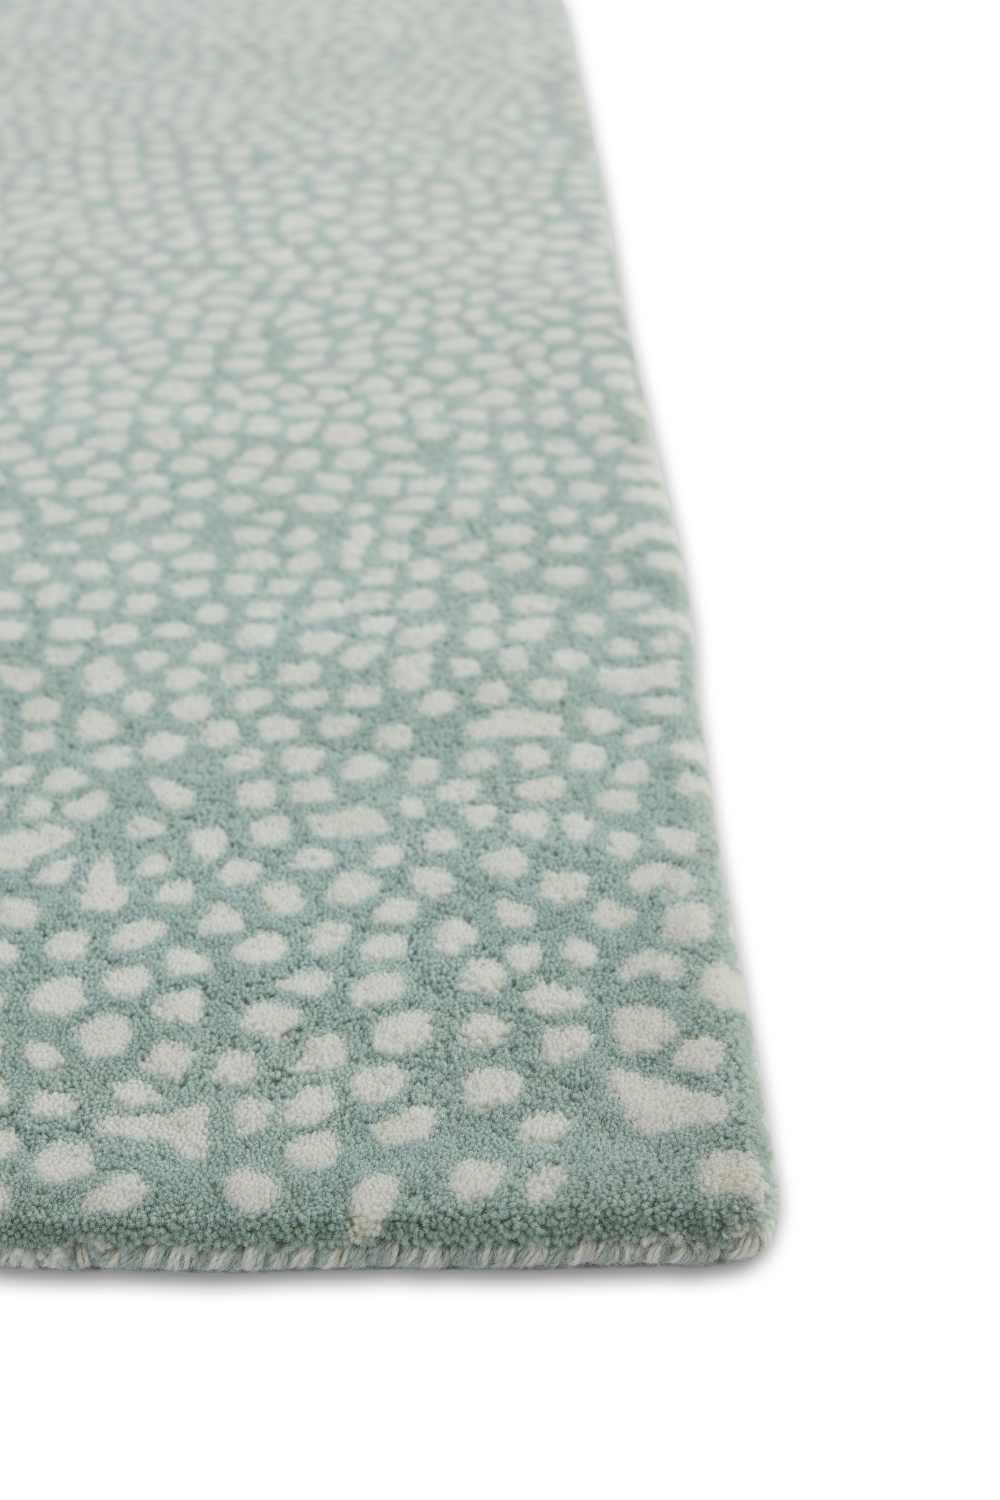 angela adams Starry Seafoam rug contemporary modern